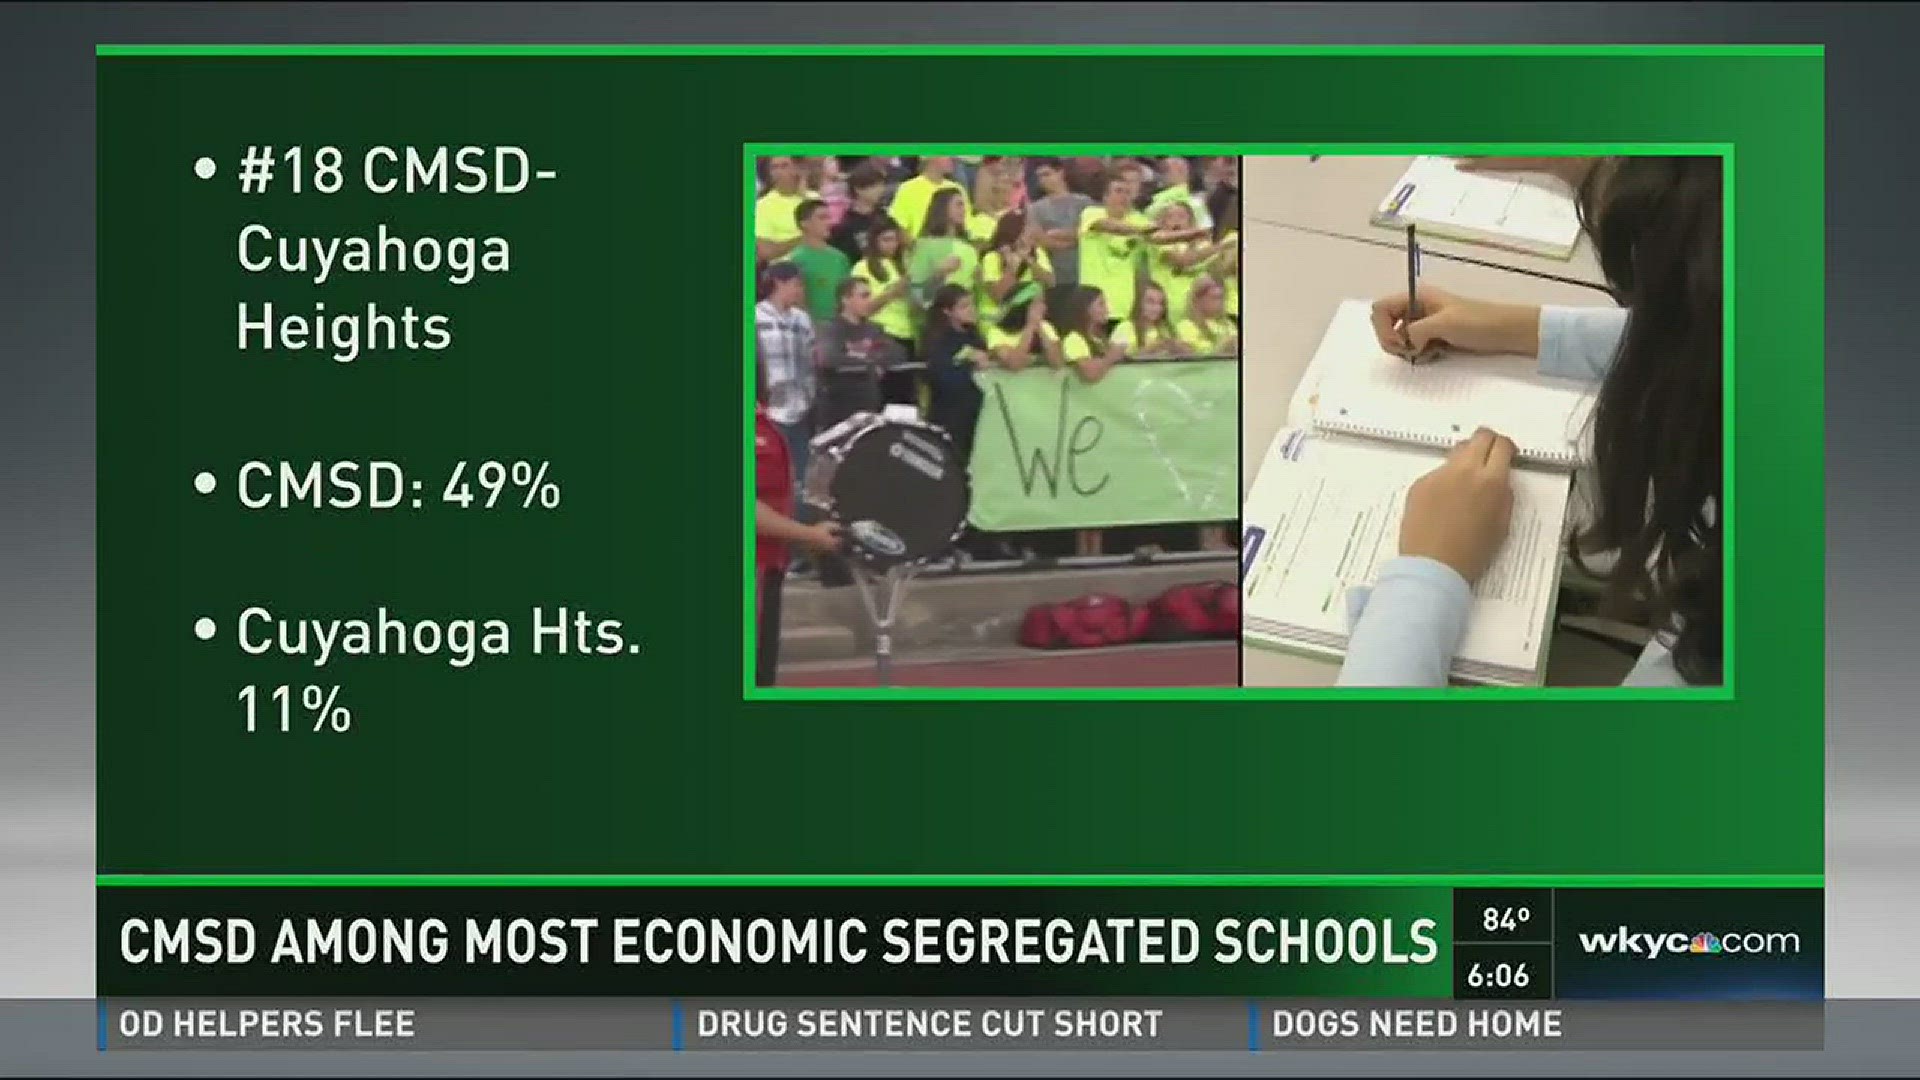 CMSD among most economic segregated schools